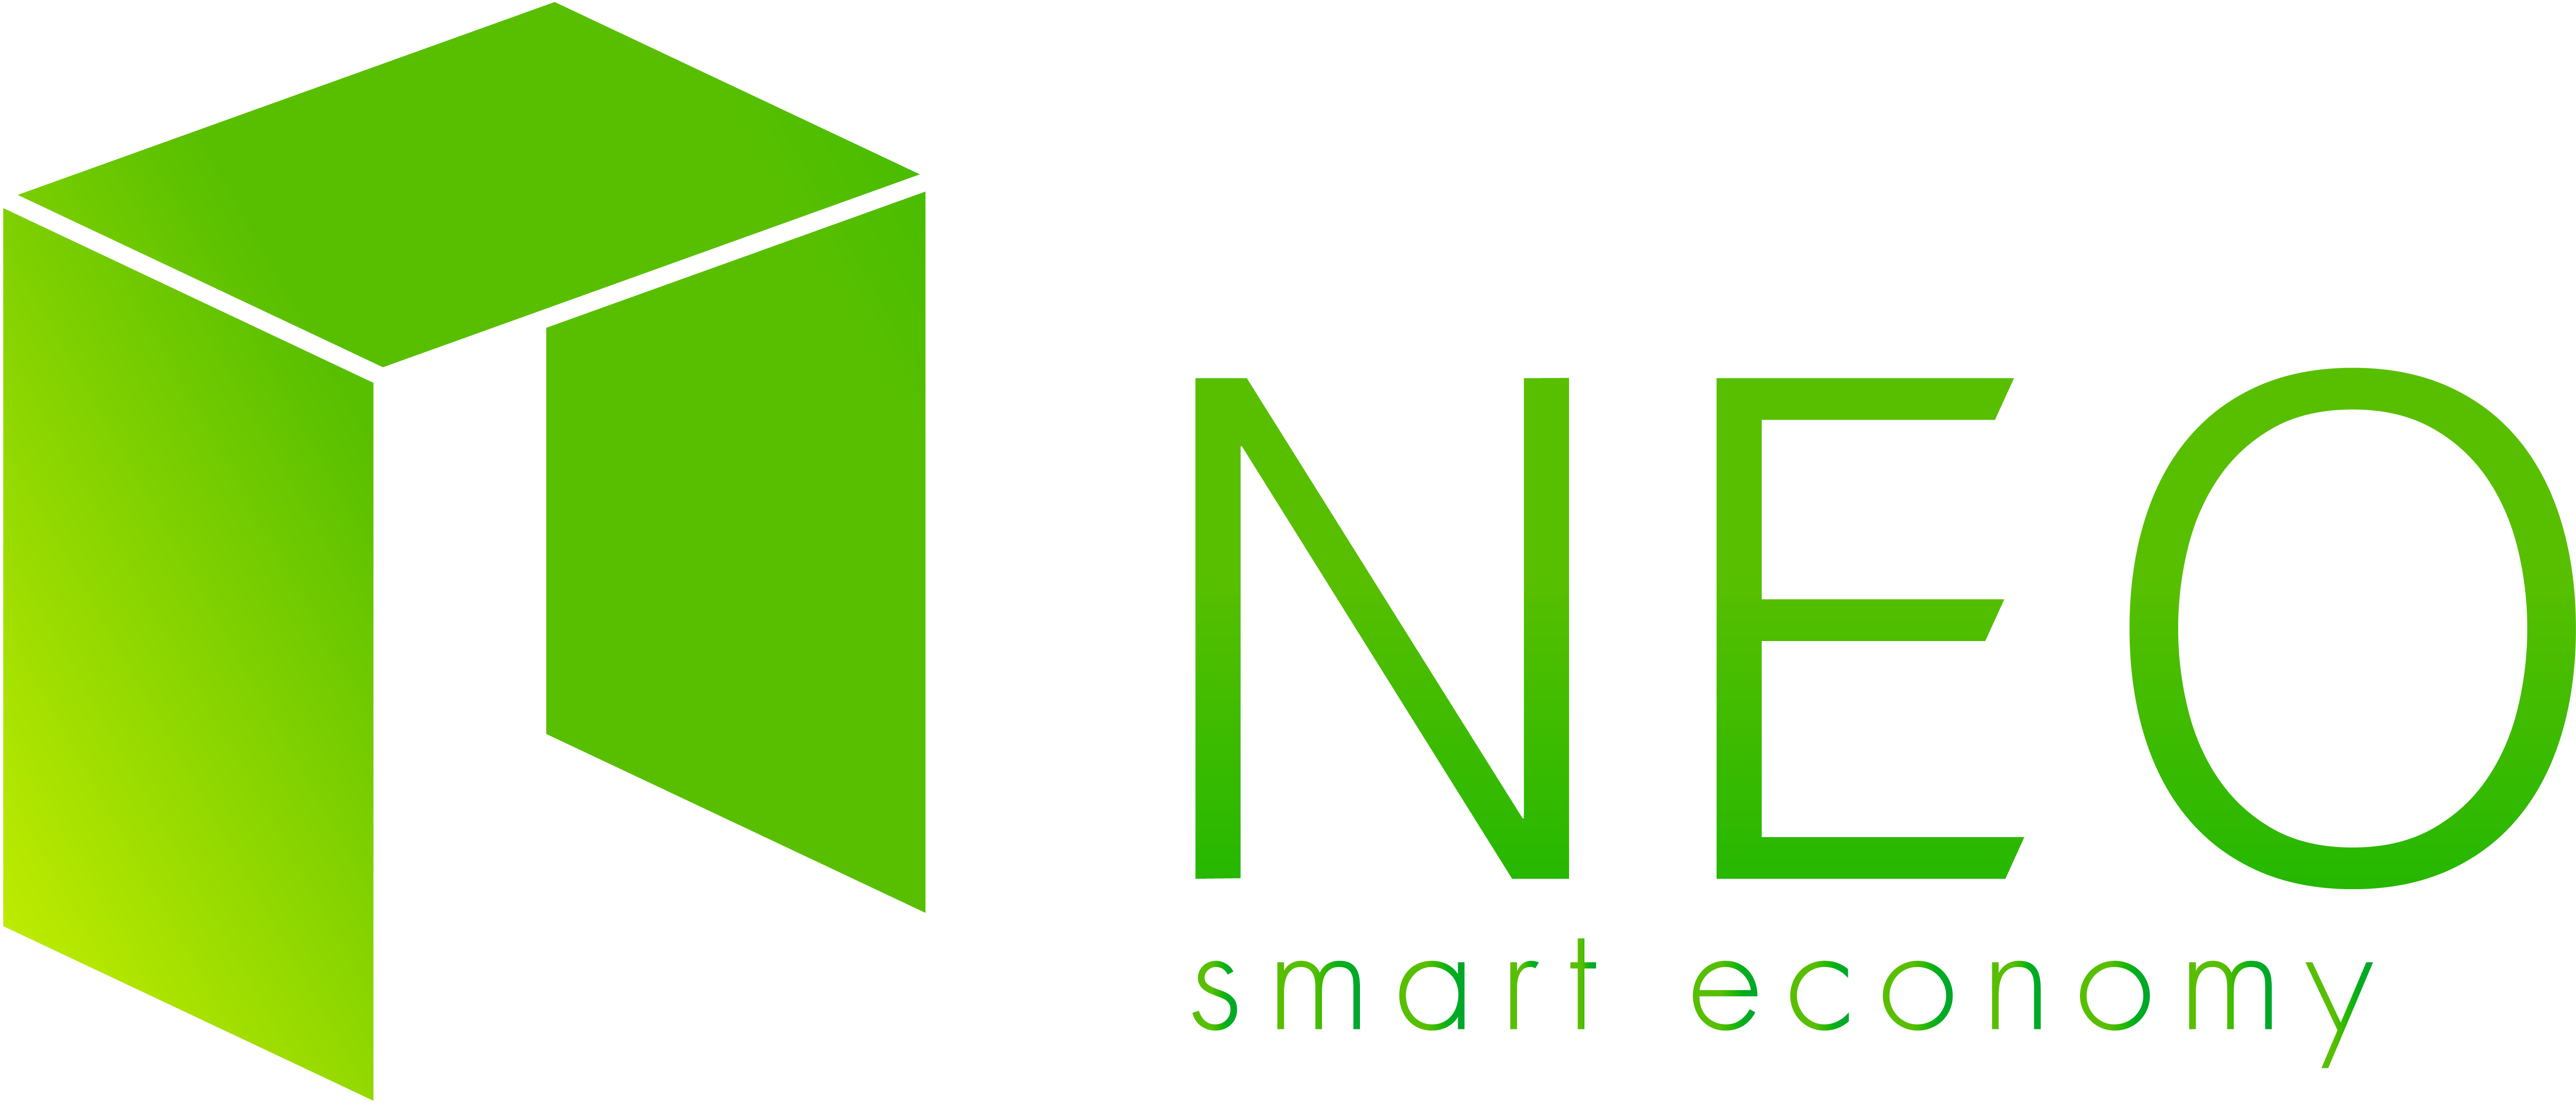 Economy Logo - NEO-smart-economy-logo - Runway East